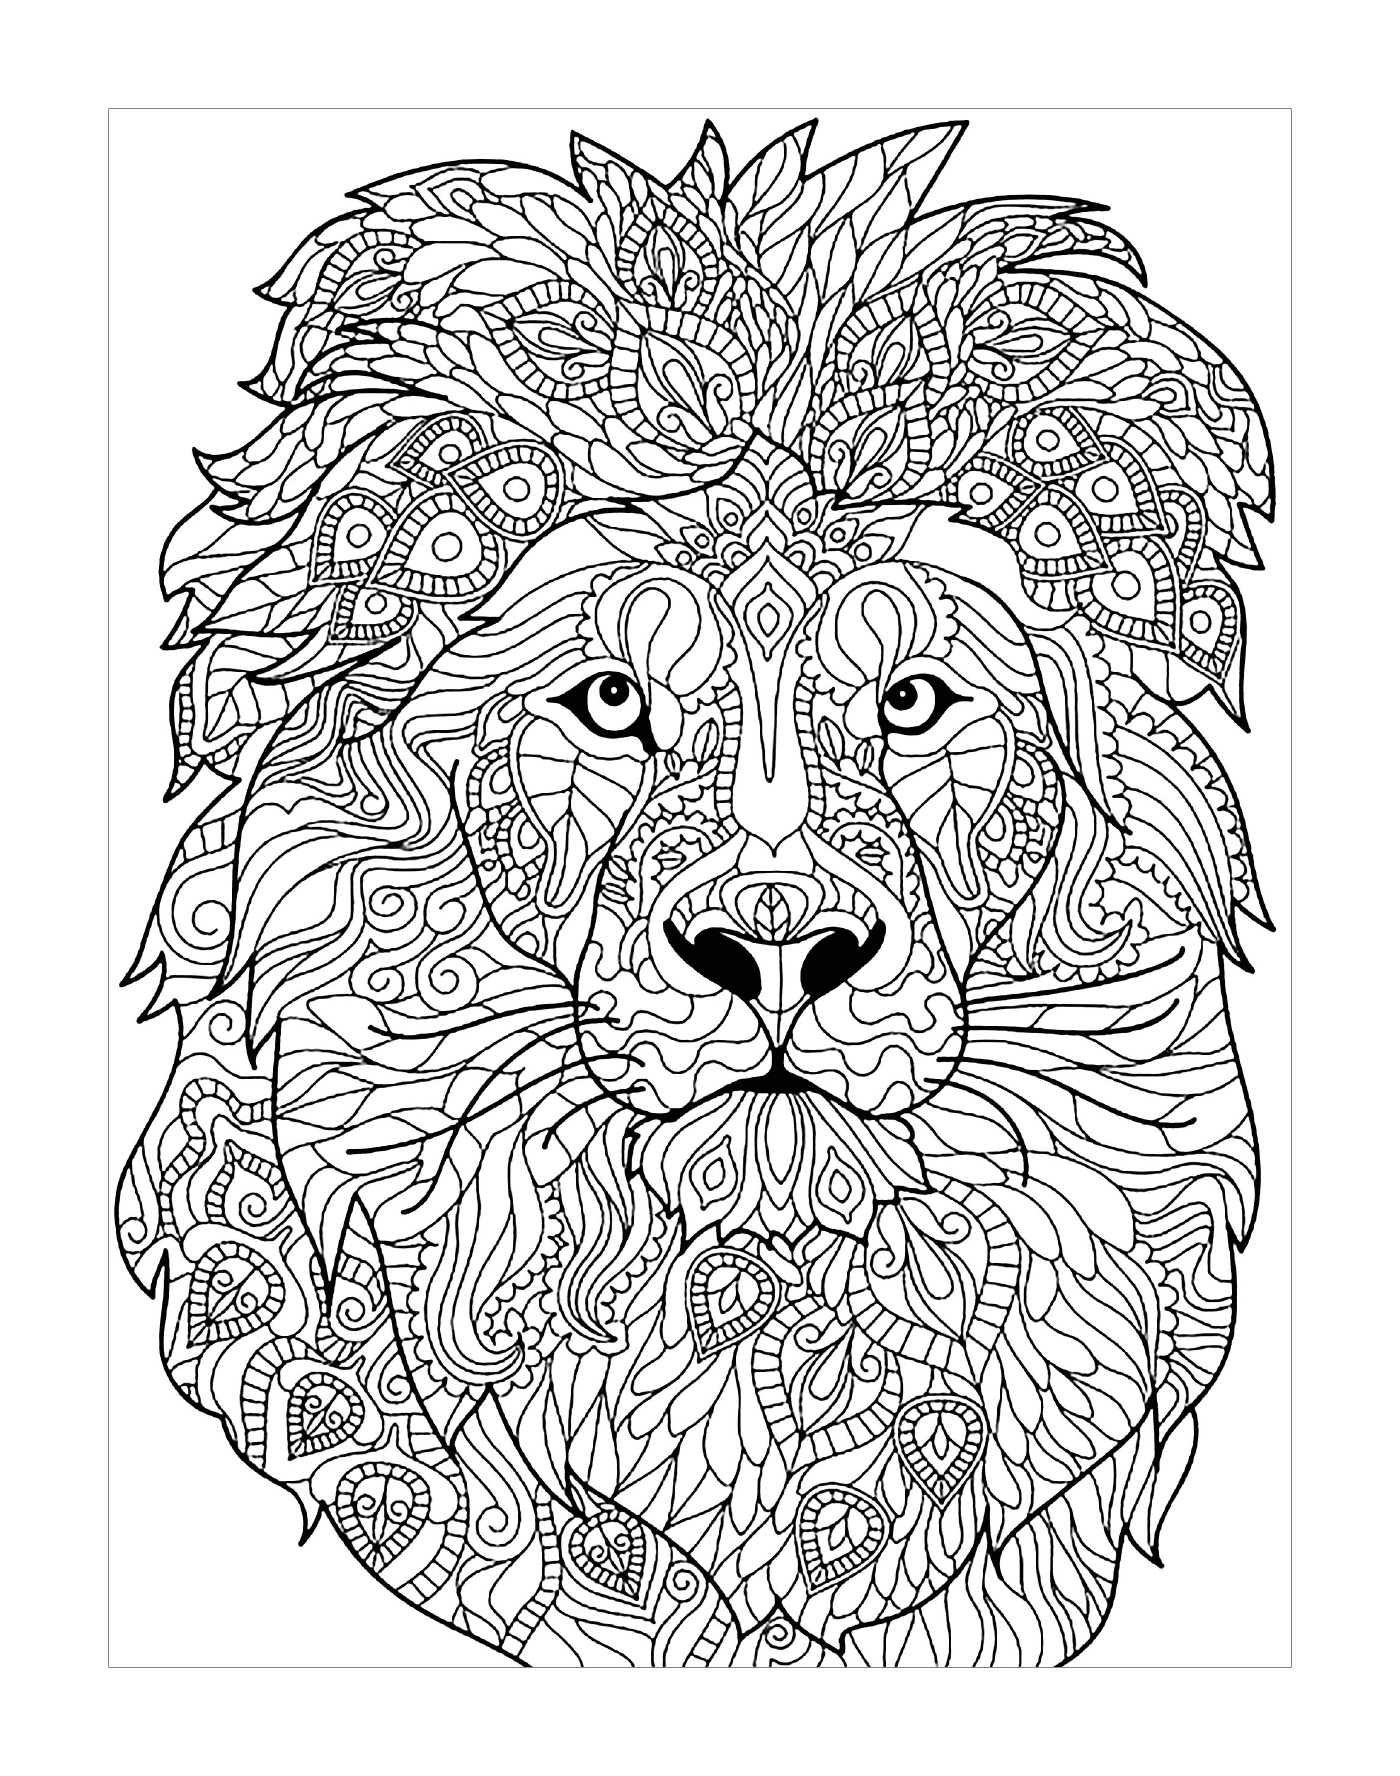  Erwachsener Löwe in komplexen Mustern 